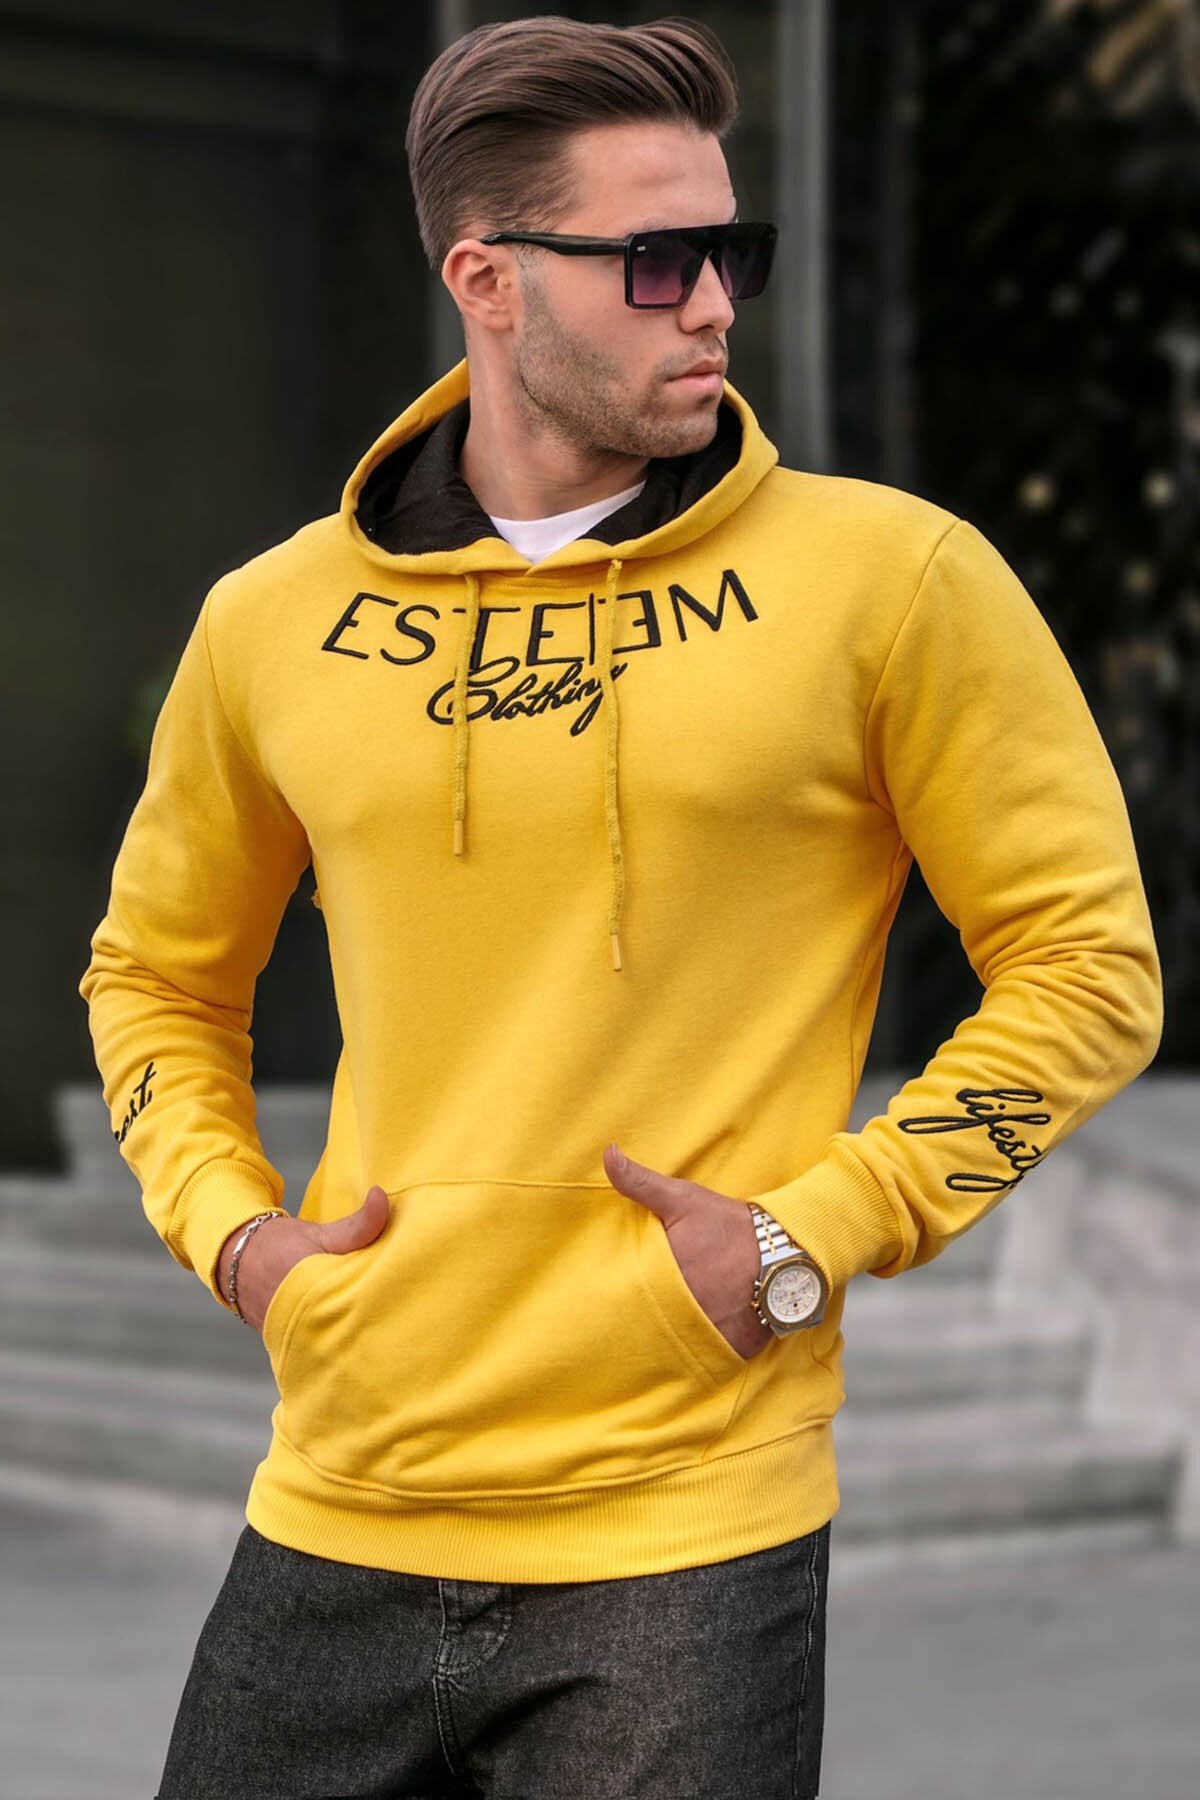 Madmext Men's Yellow Printed Hoodie Sweatshirt 4402